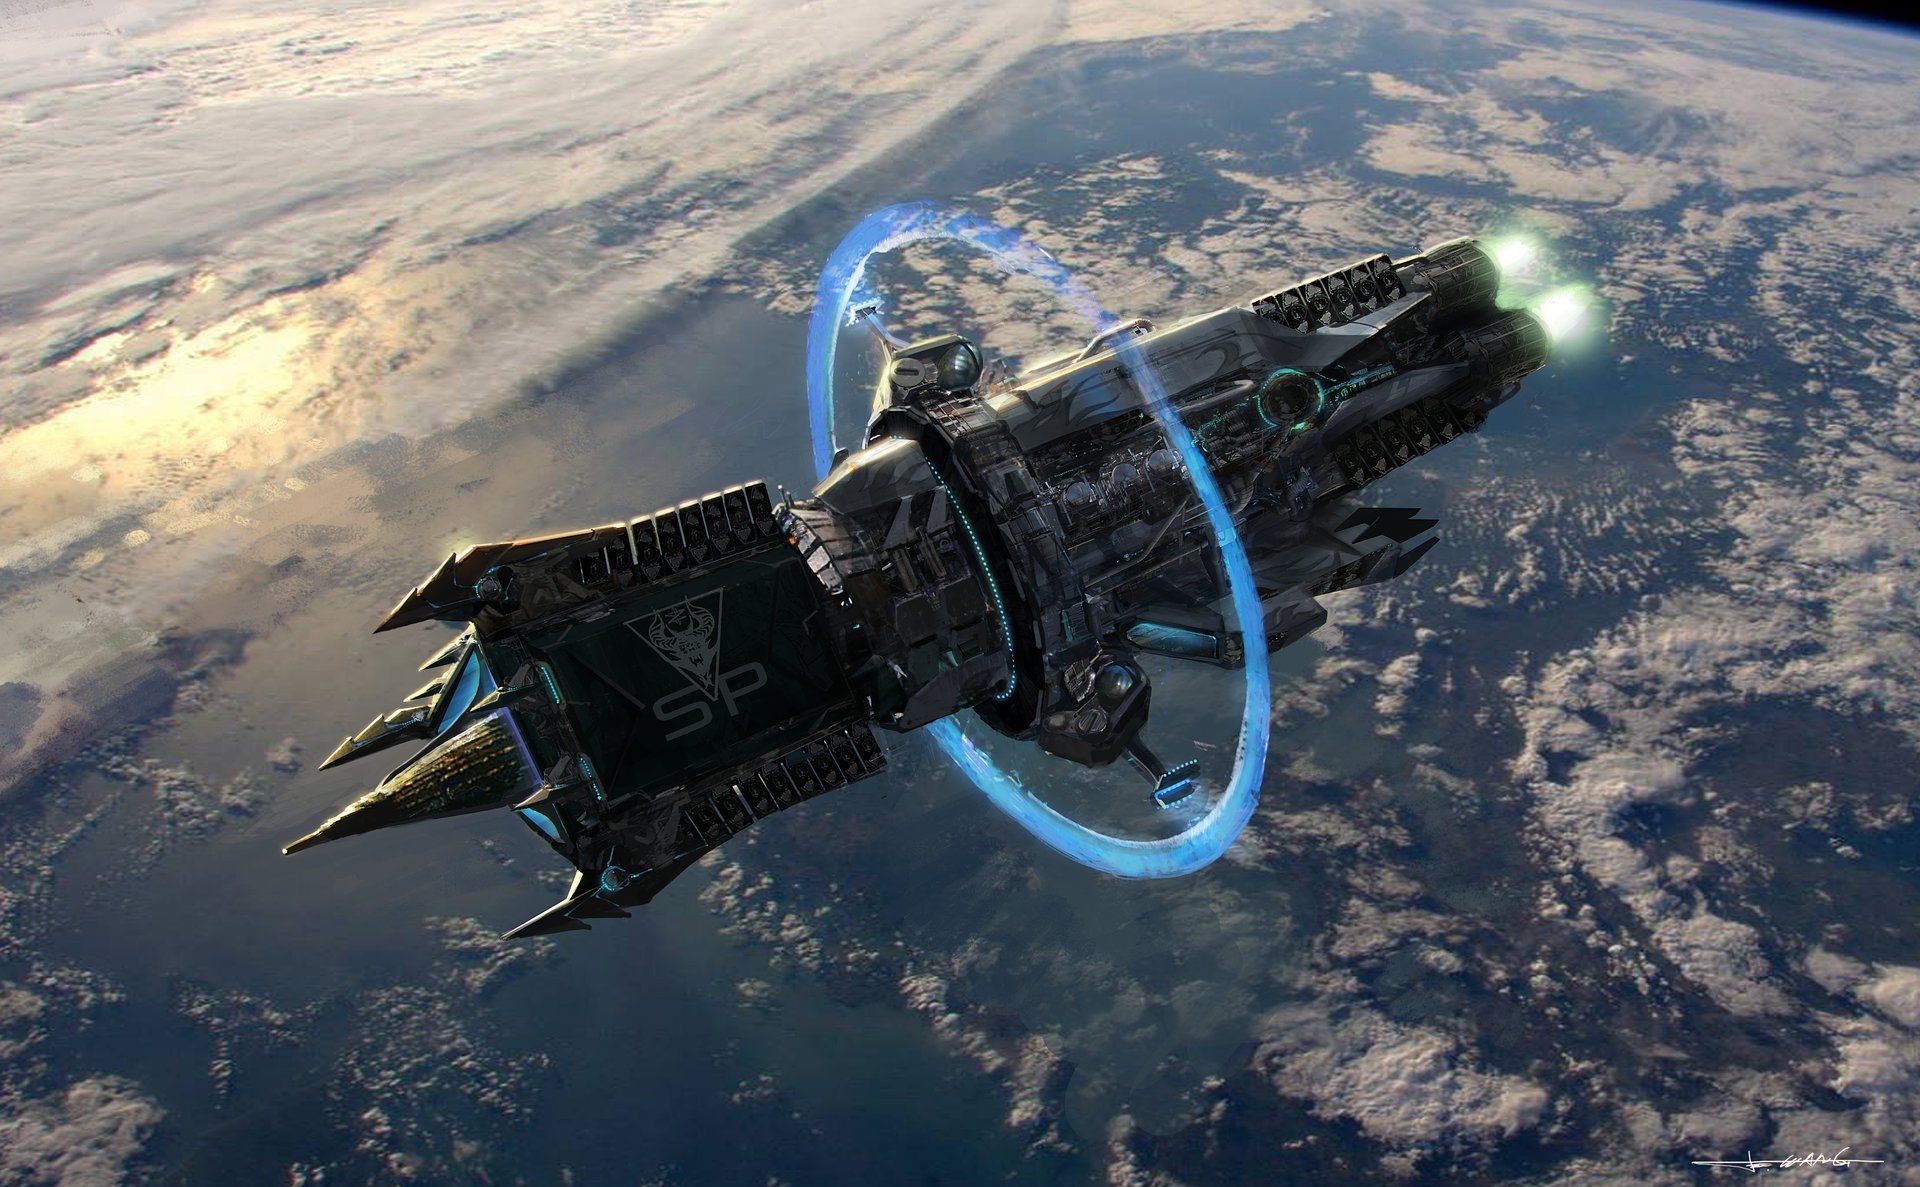 General 1920x1187 space spaceship planet science fiction artwork digital art